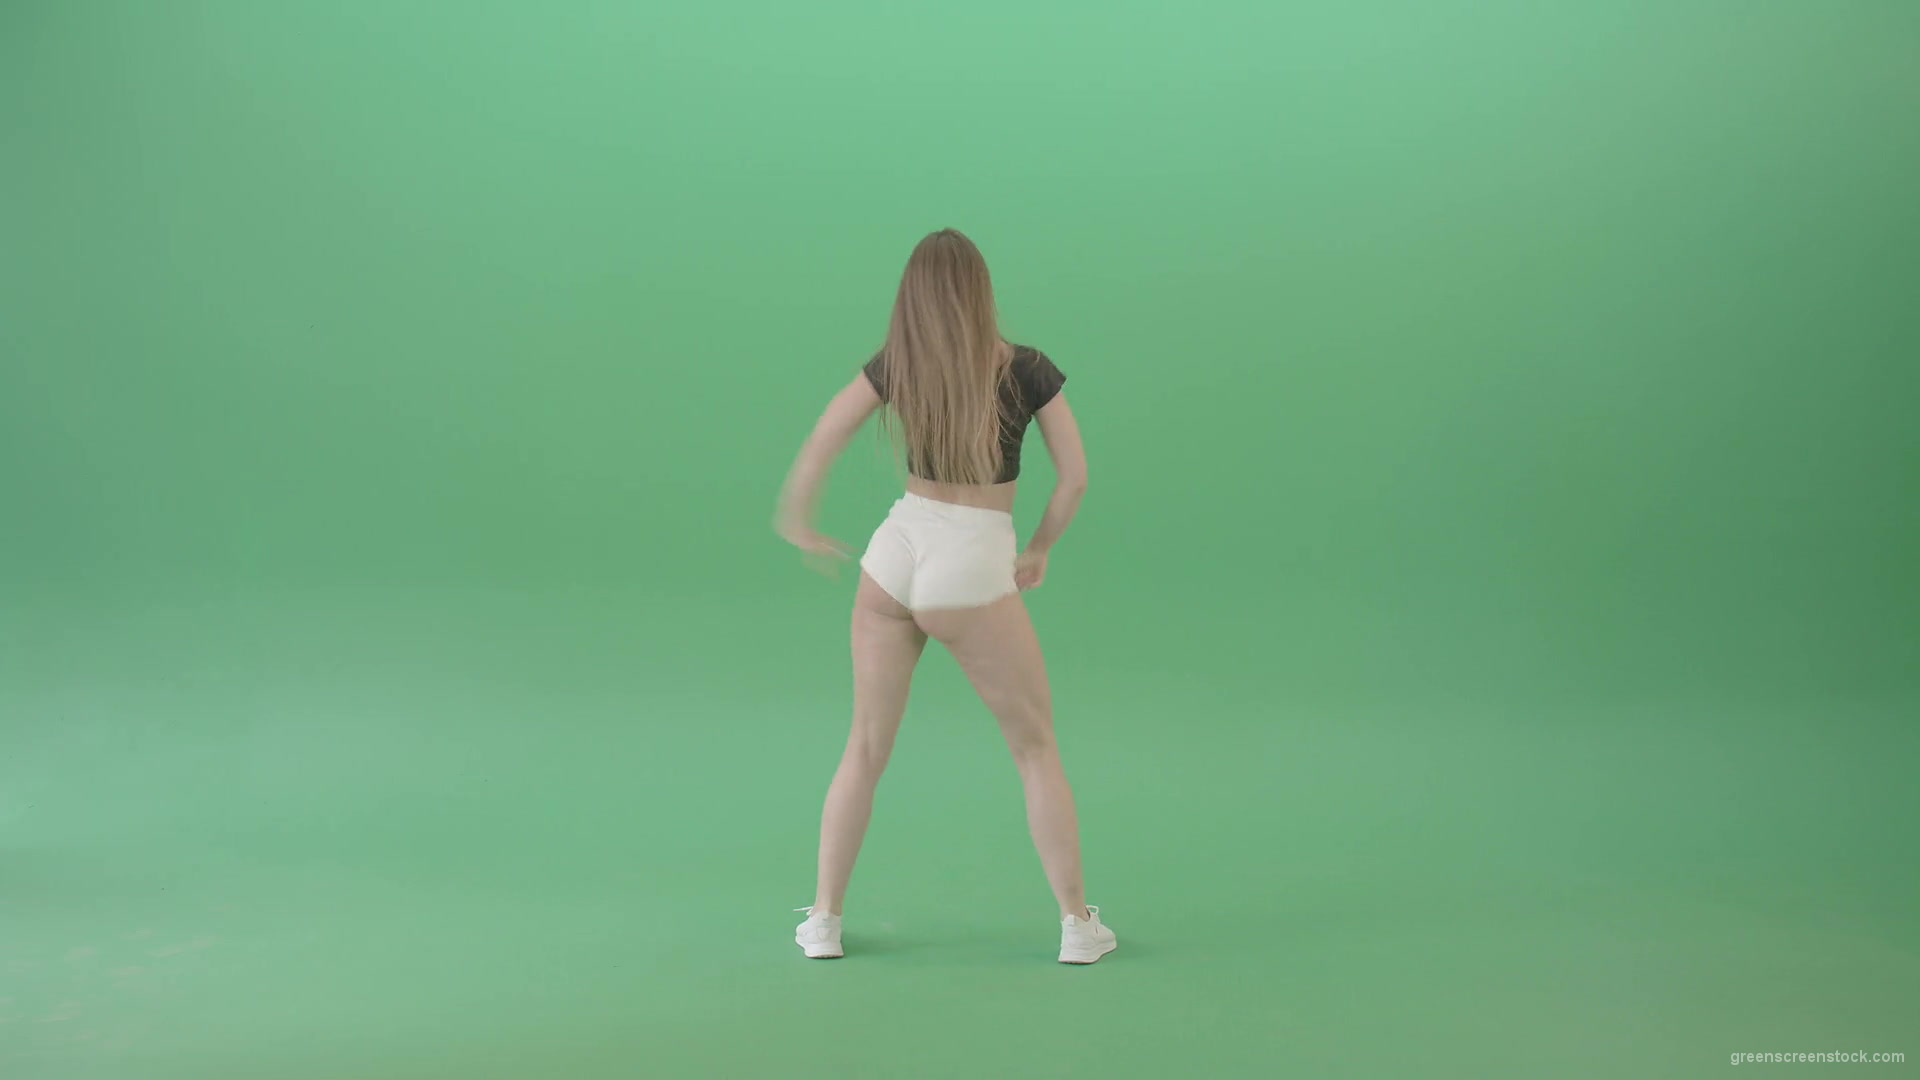 Long-dancing-Video-Footage-of-Twerking-Girl-shaking-ass-and-dancing-over-Green-Screen-1920_007 Green Screen Stock